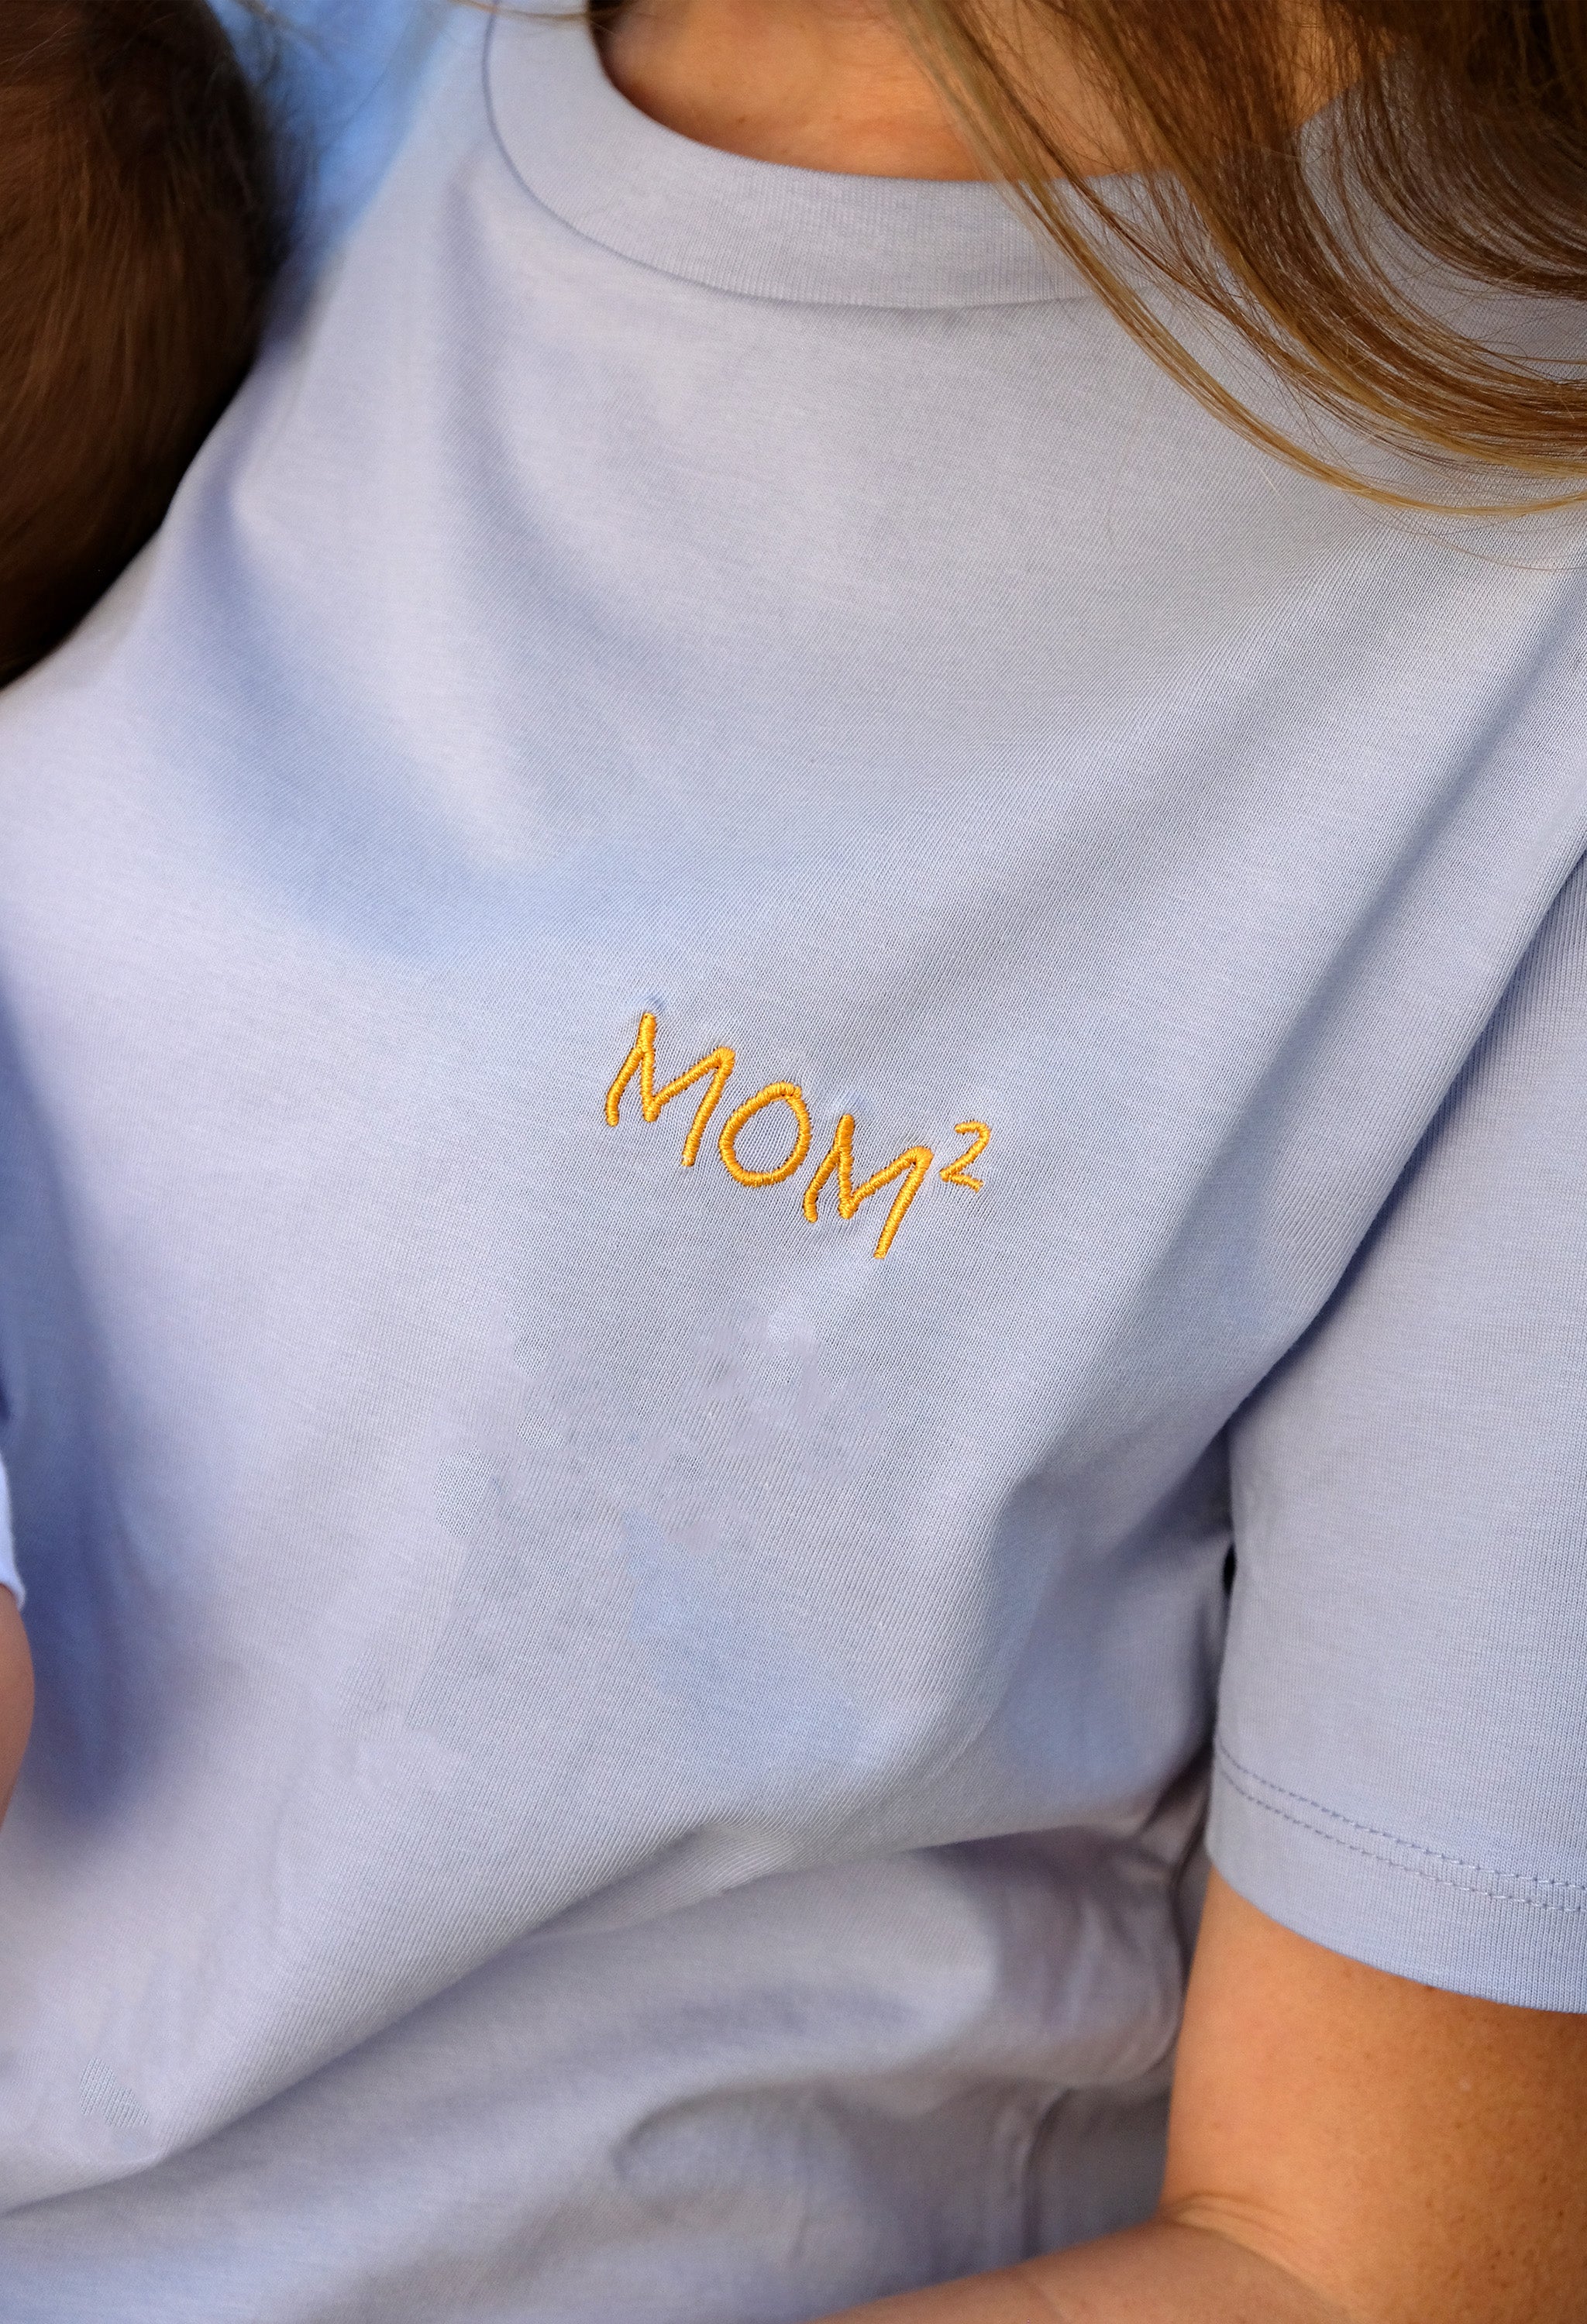 Moms' T-shirt